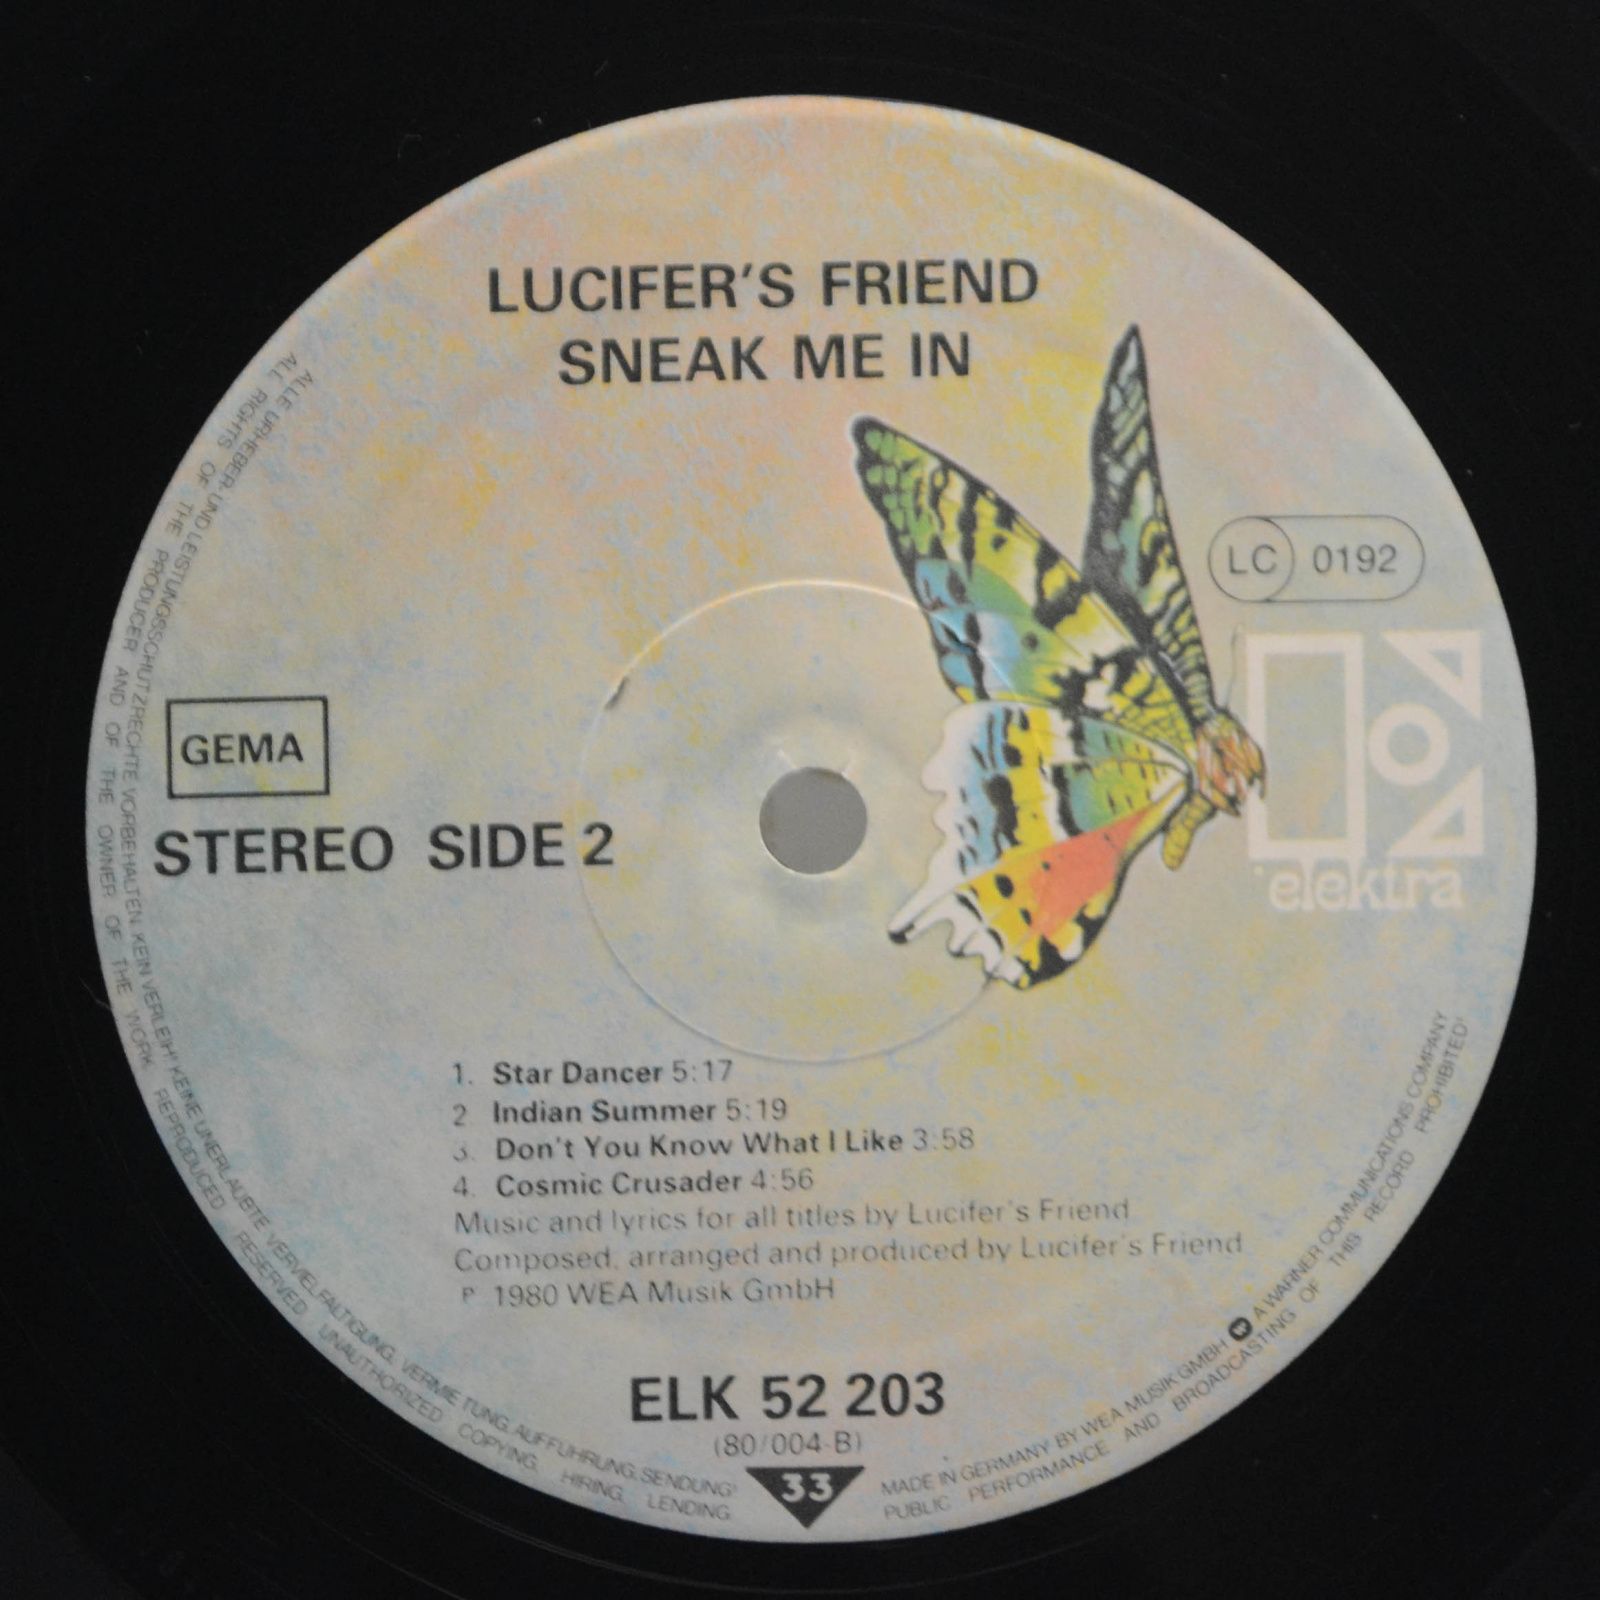 Lucifer's Friend — Sneak Me In, 1980